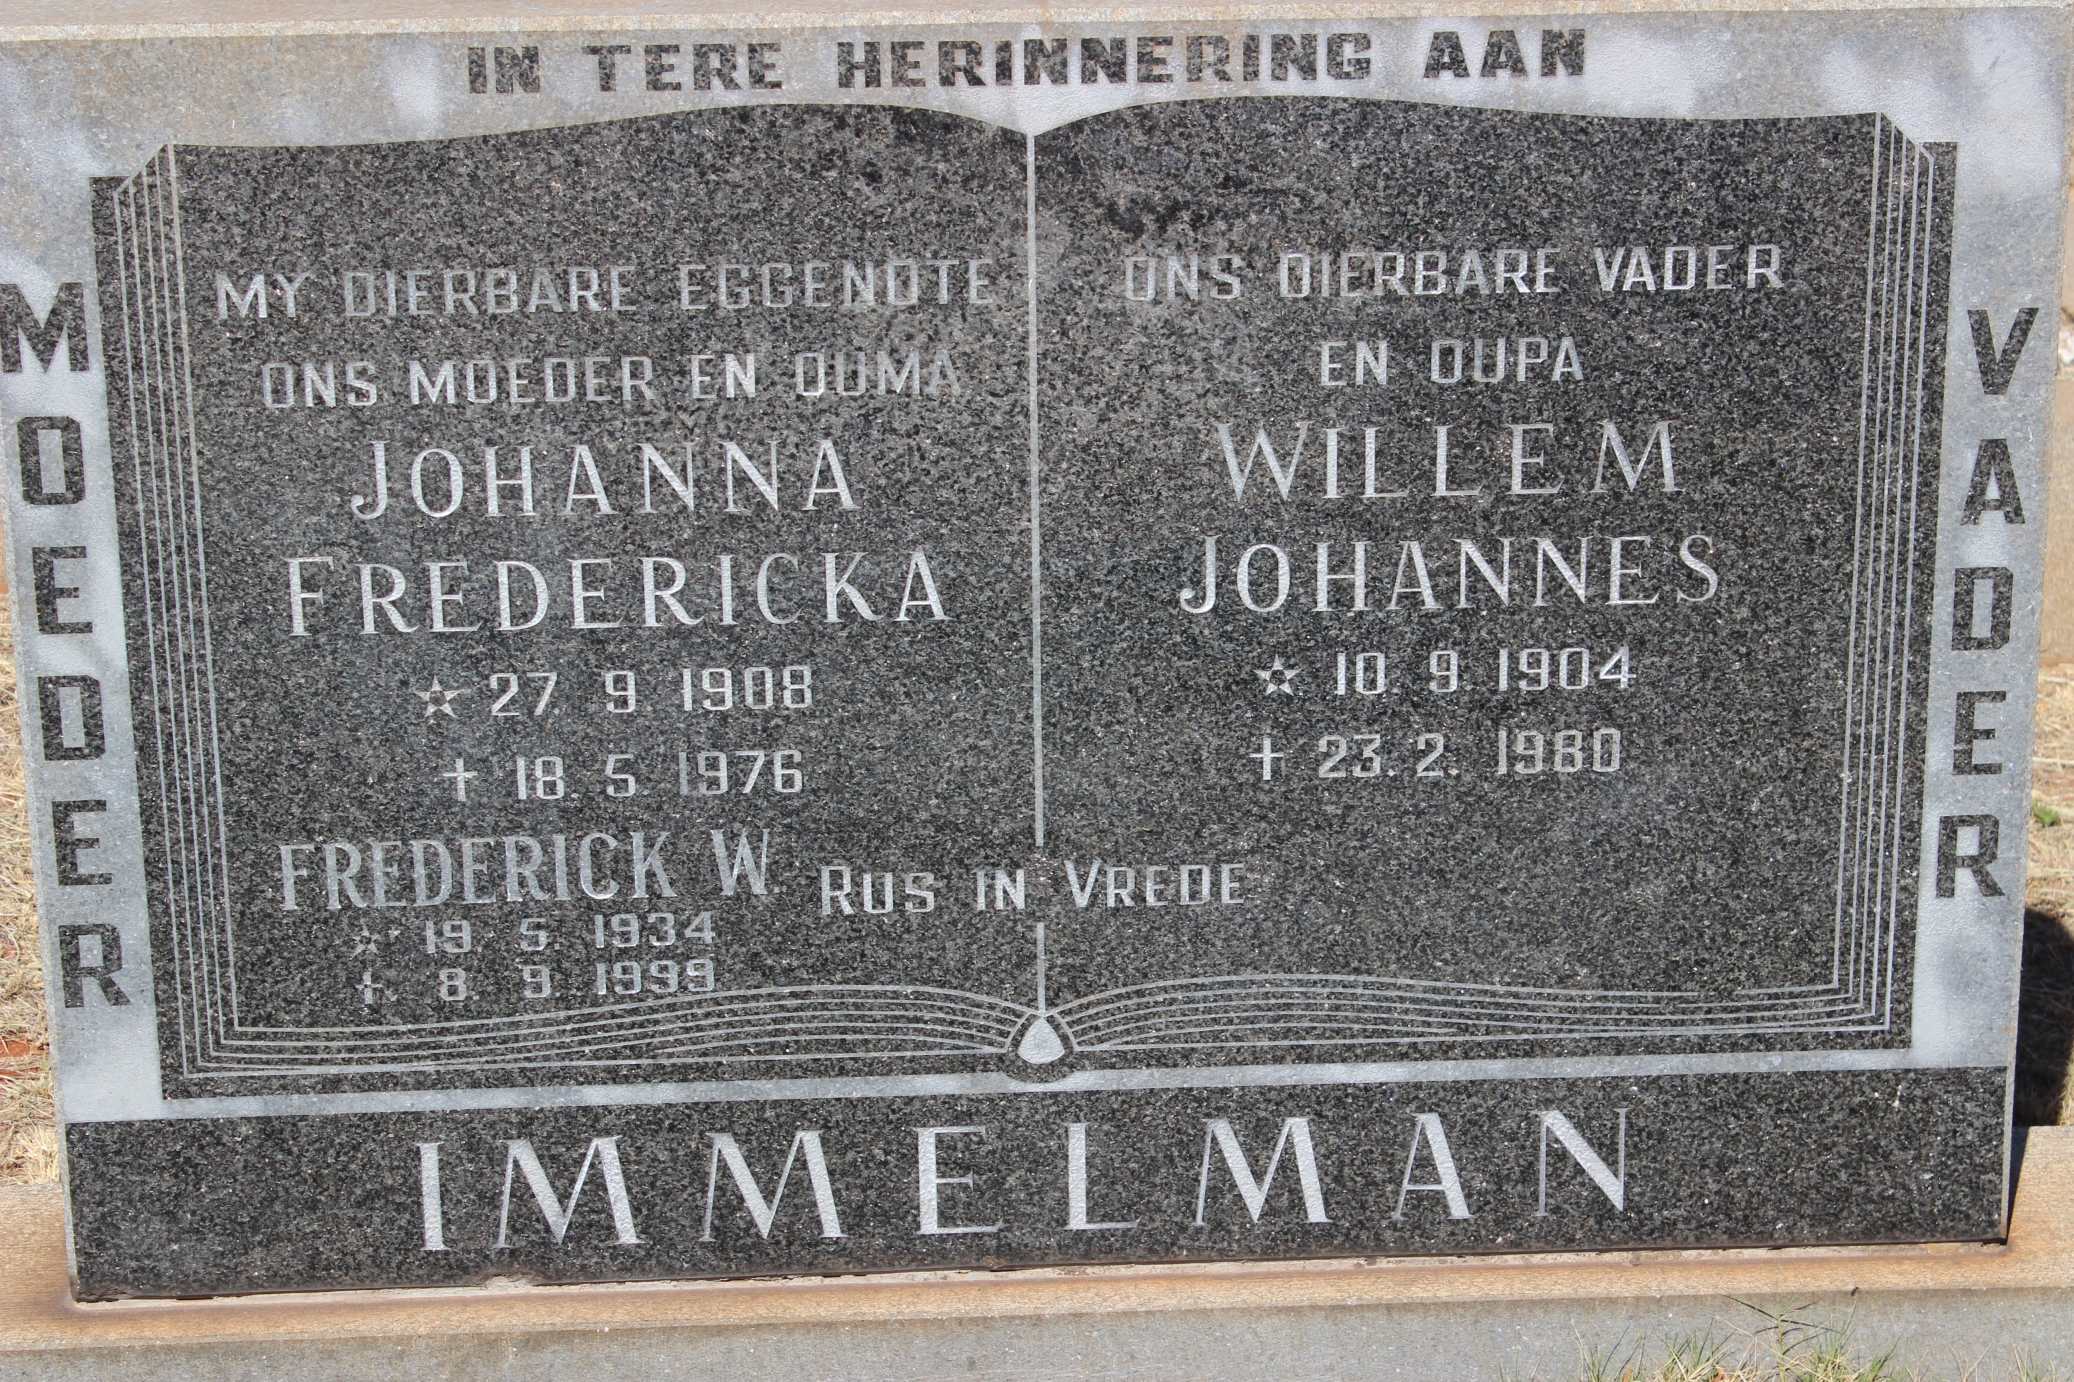 IMMELMAN Willem Johannes 1904-1980 & Johanna Fredericka 1908-1976 :: IMMELMAN Frederick W. 1934-1999